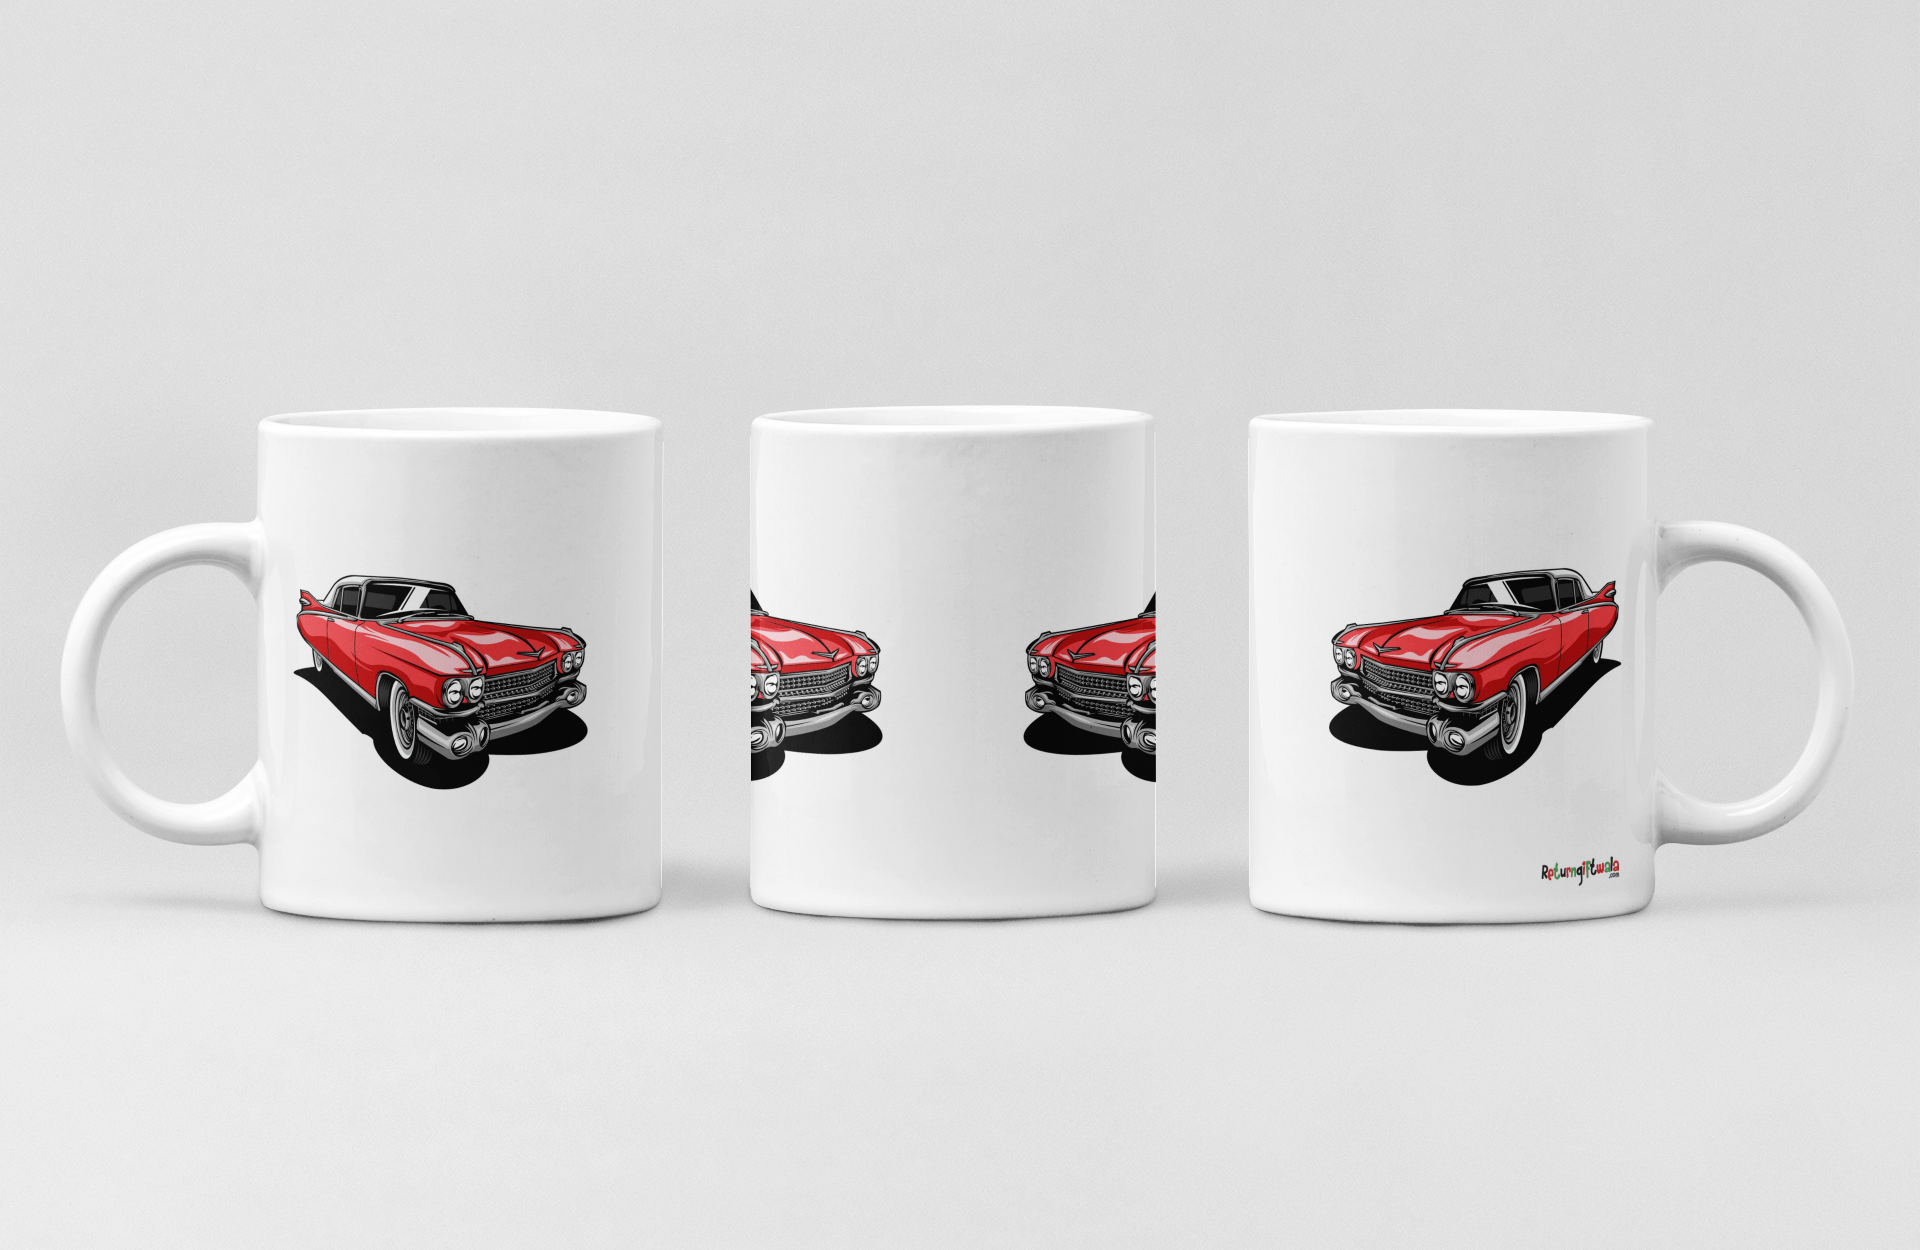 Long Red Car printed Coffee Mug